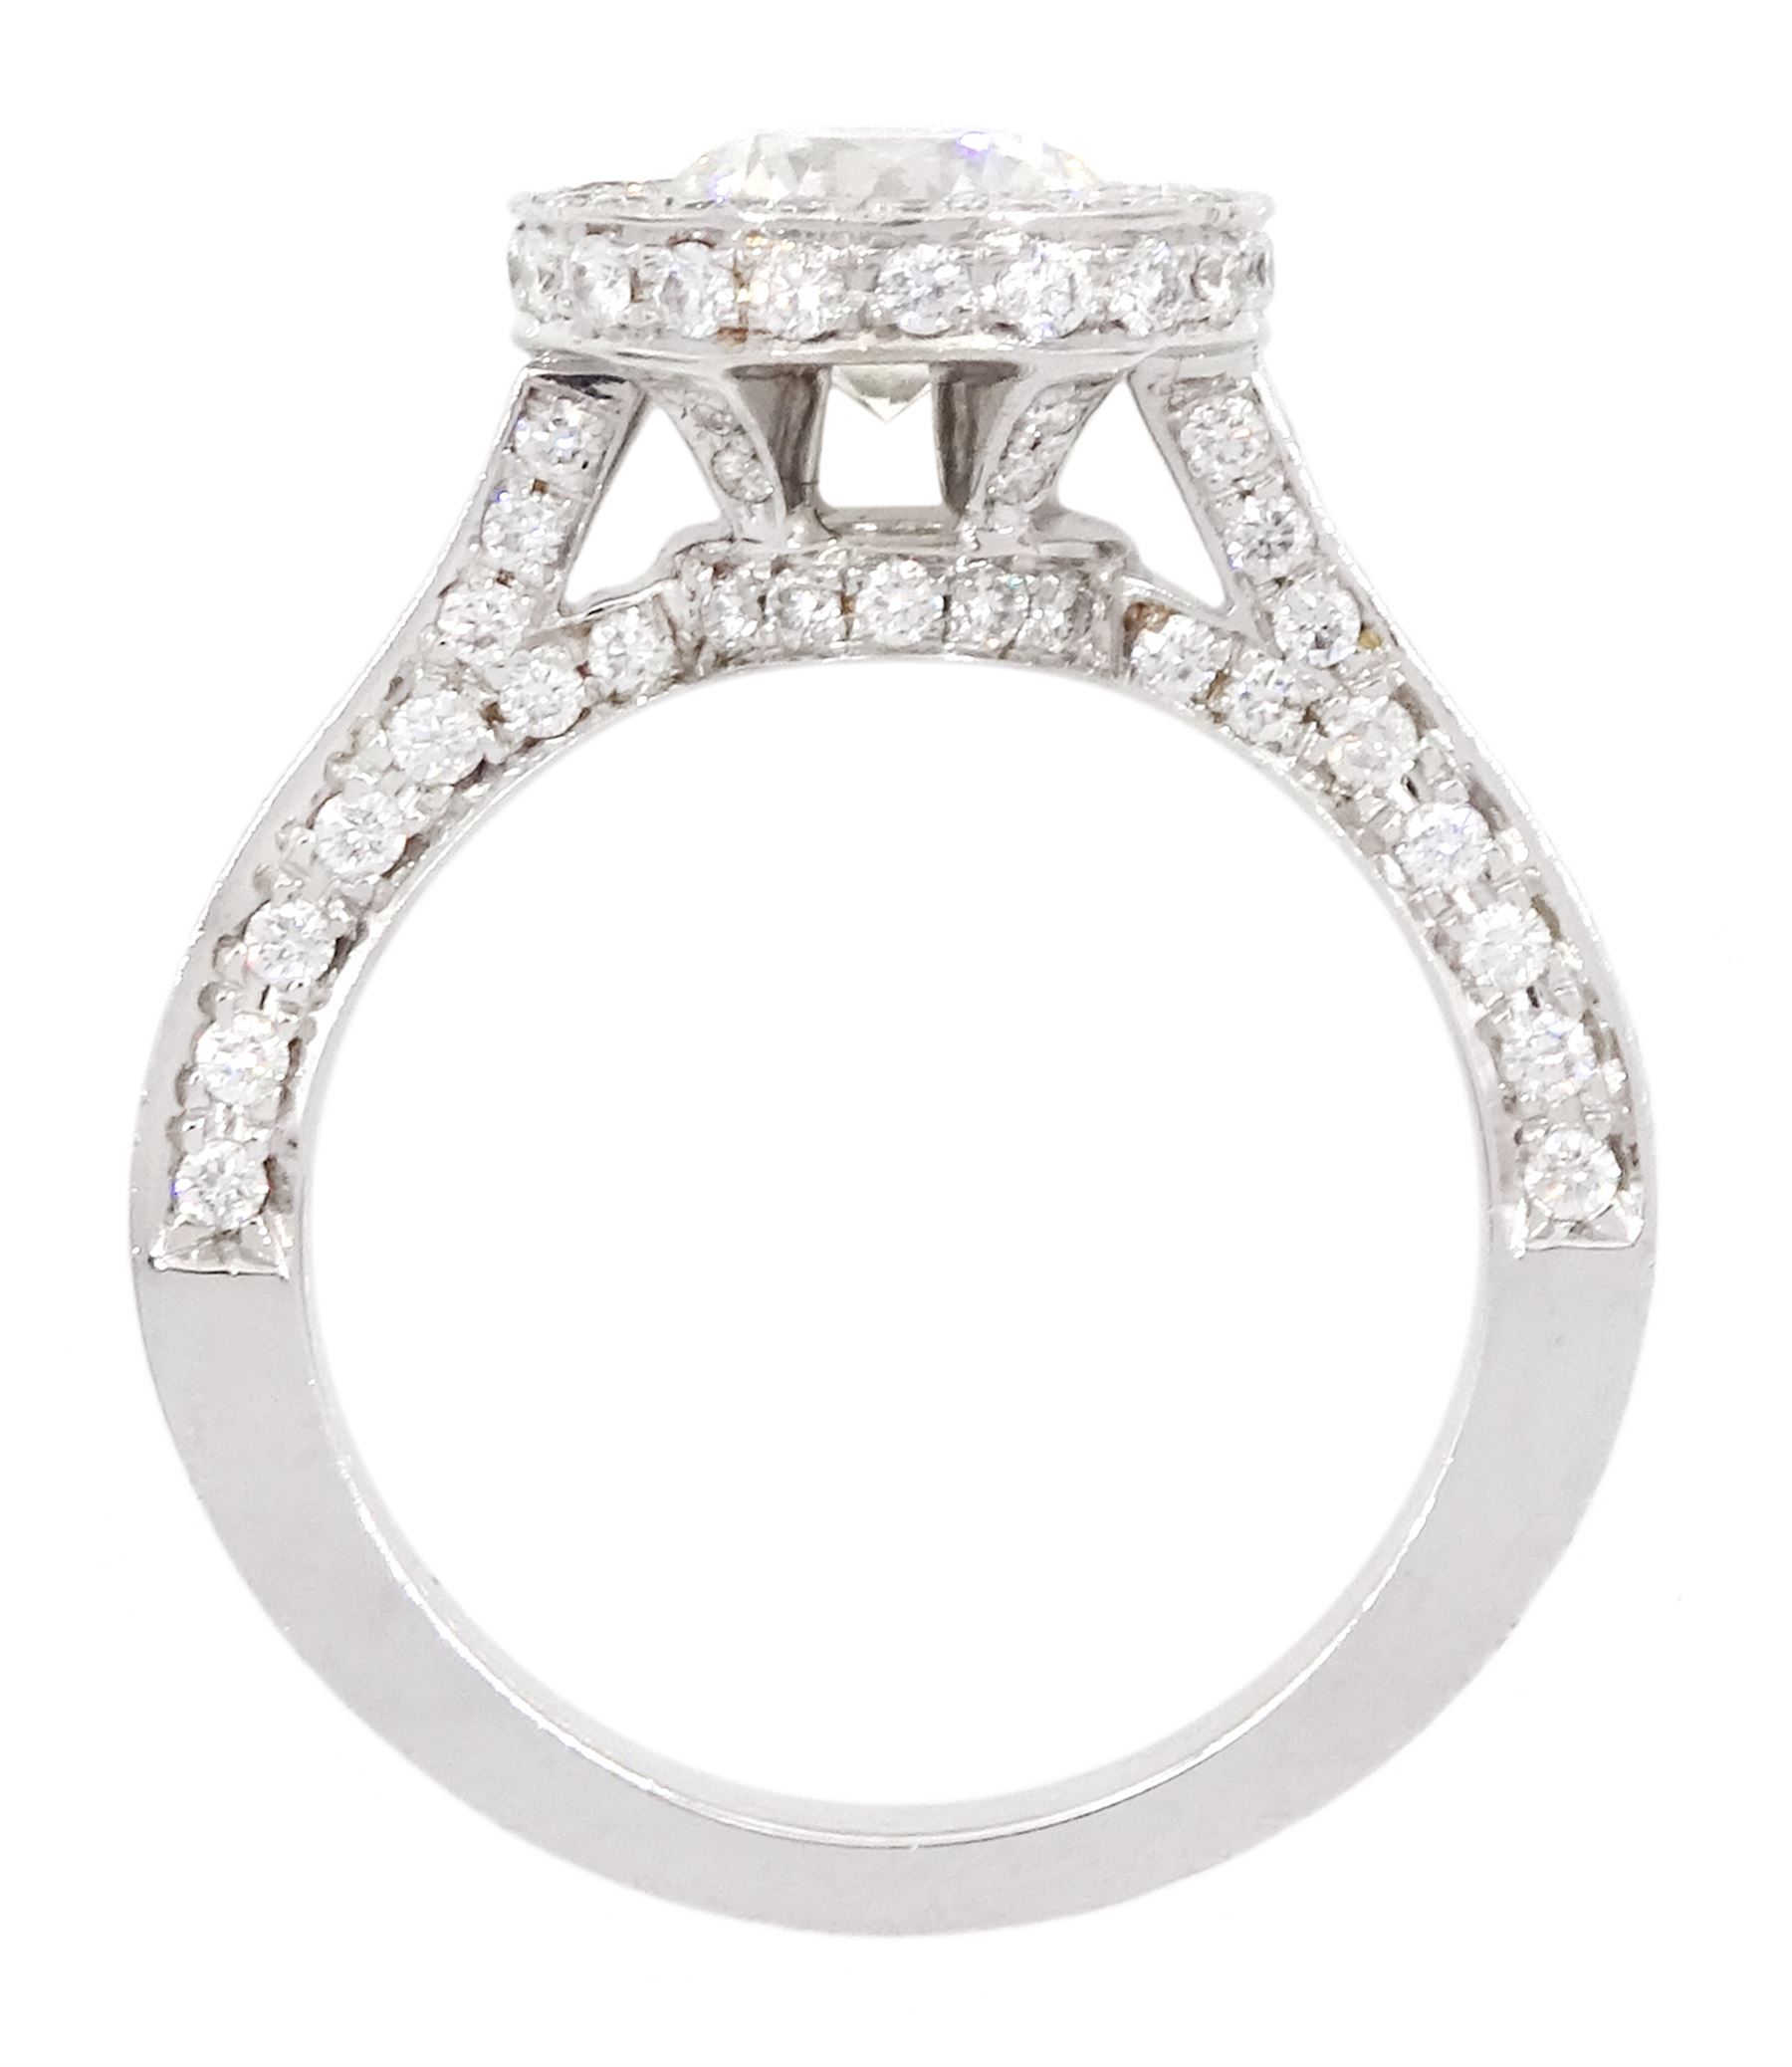 18ct white gold single stone round brilliant cut diamond ring - Image 4 of 4